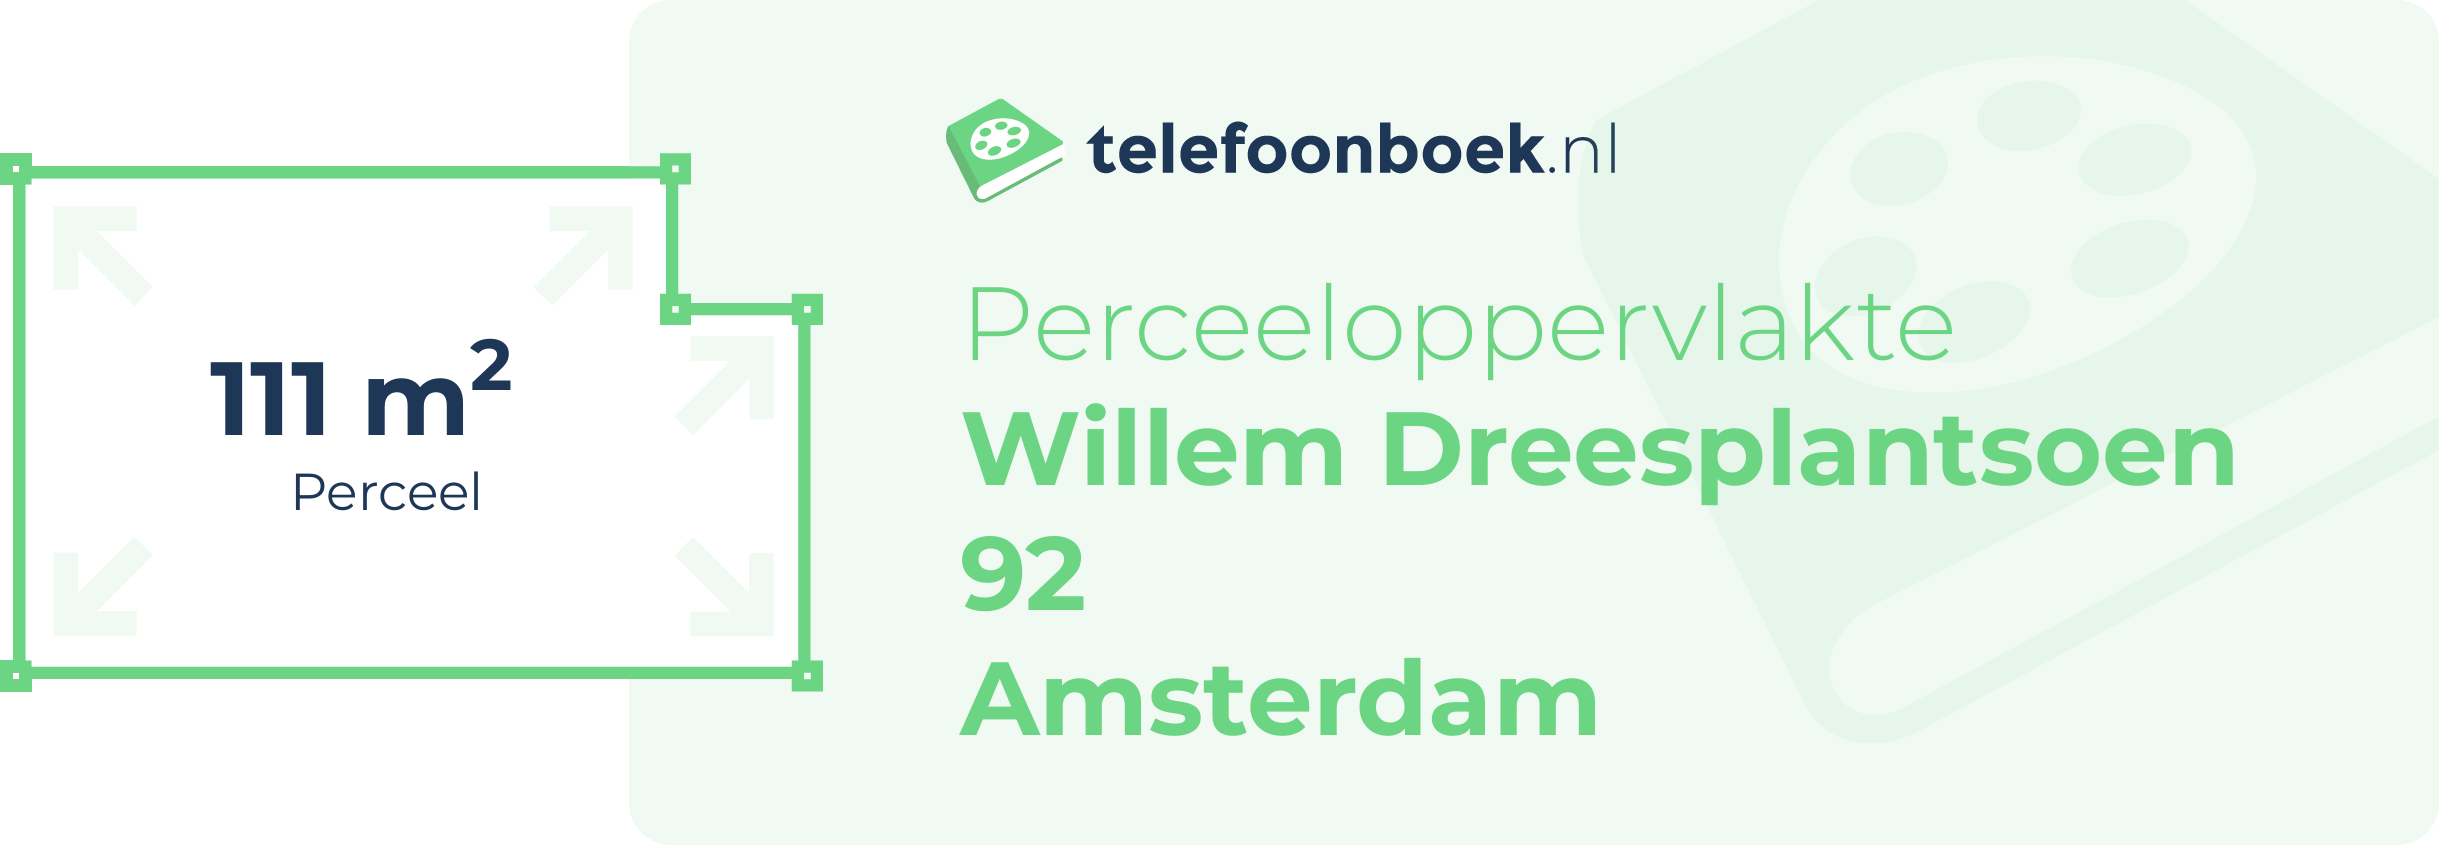 Perceeloppervlakte Willem Dreesplantsoen 92 Amsterdam